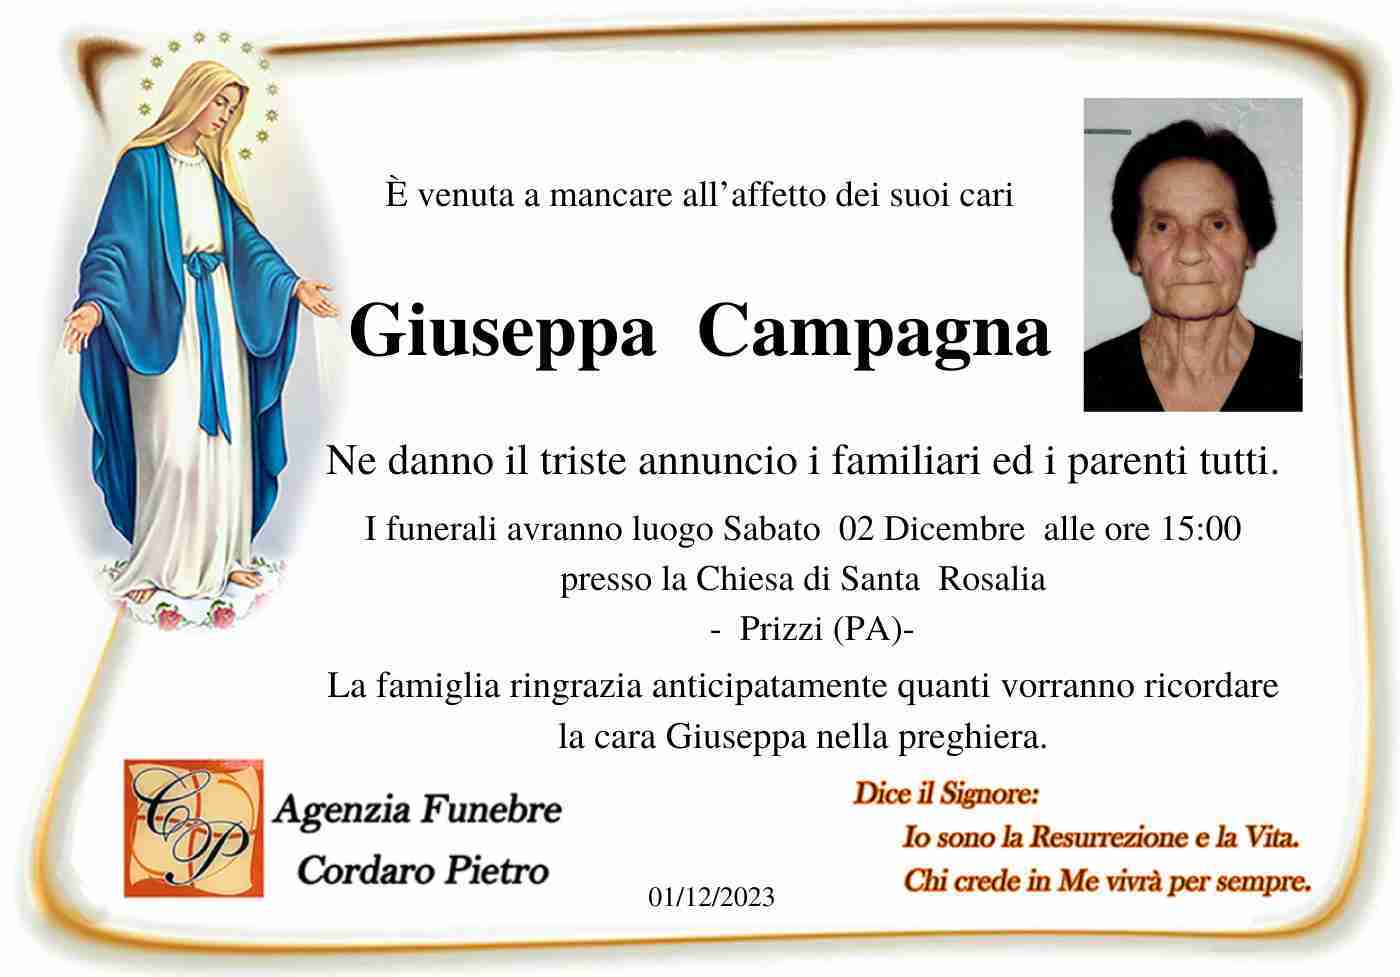 Giuseppa Campagna